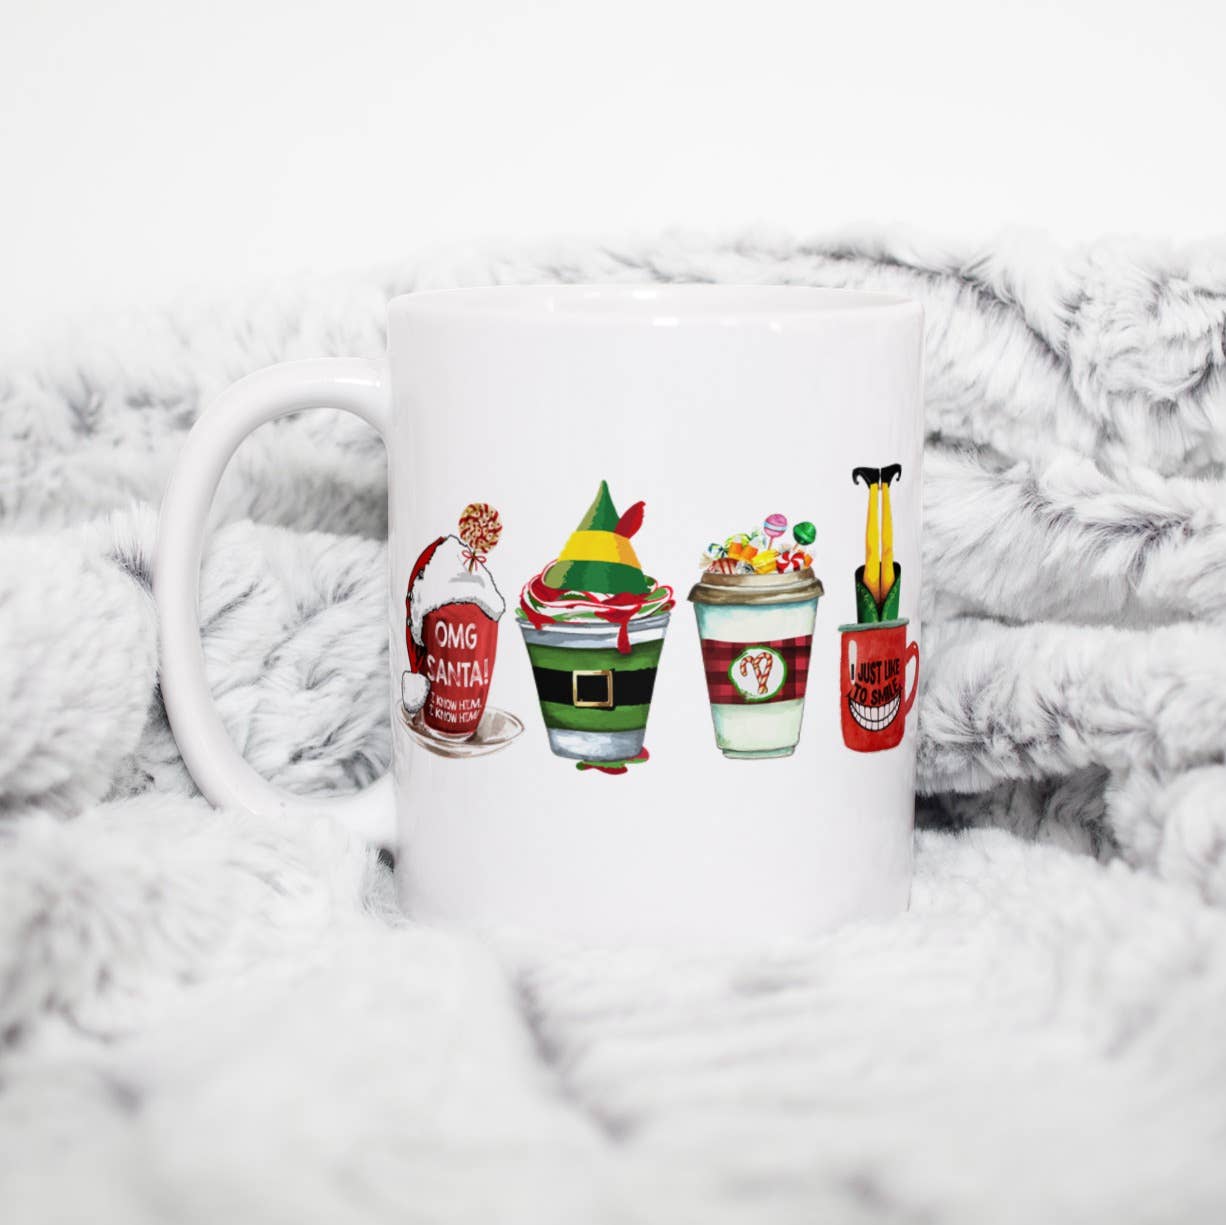 Christmas Mug - Elf Movie Mugs